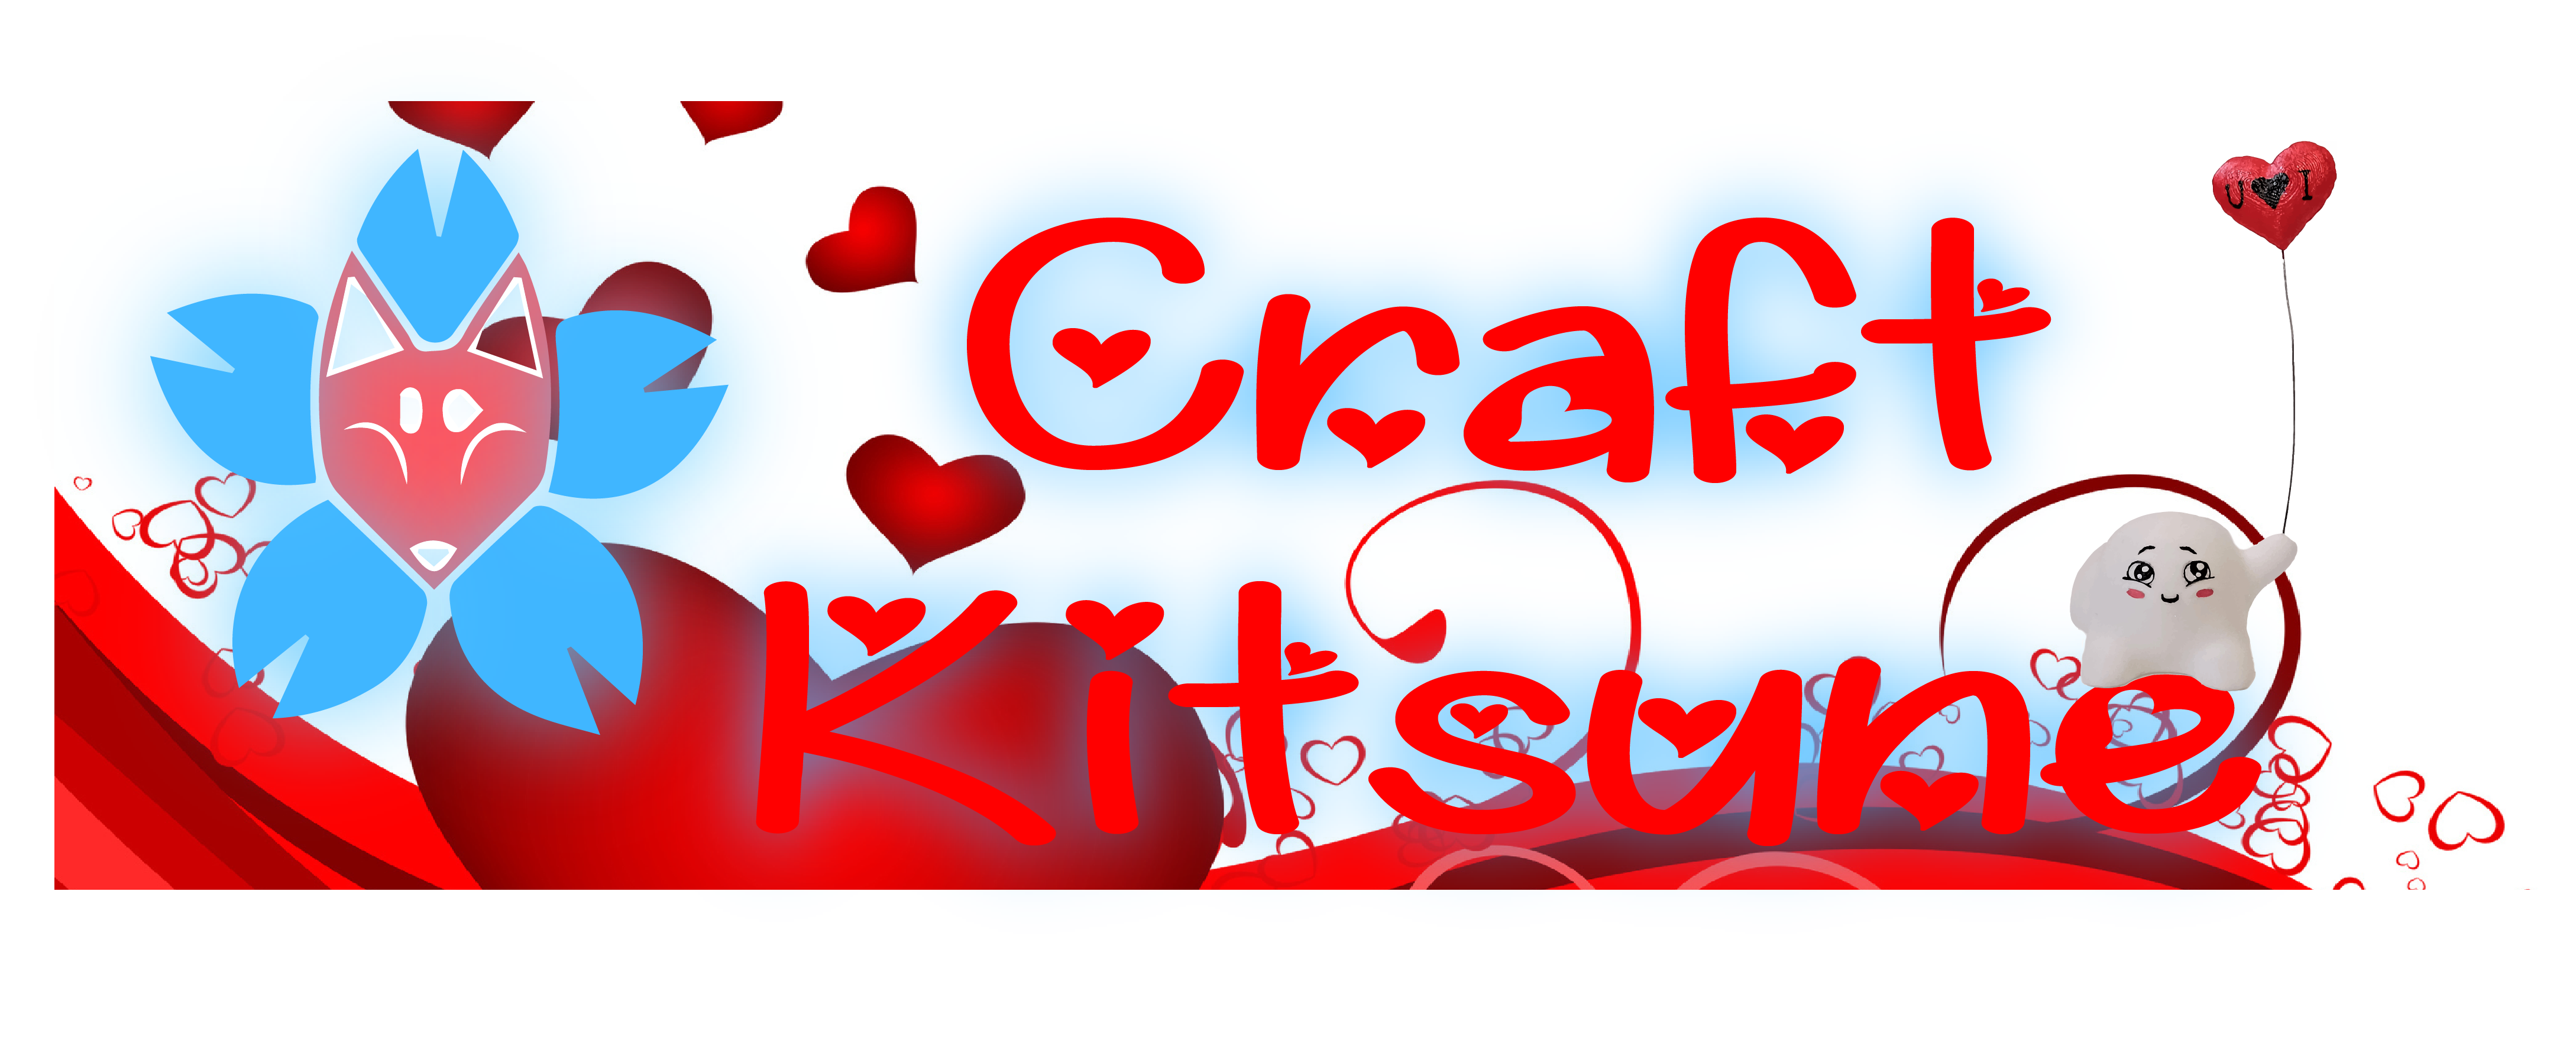 Craft Kitsune